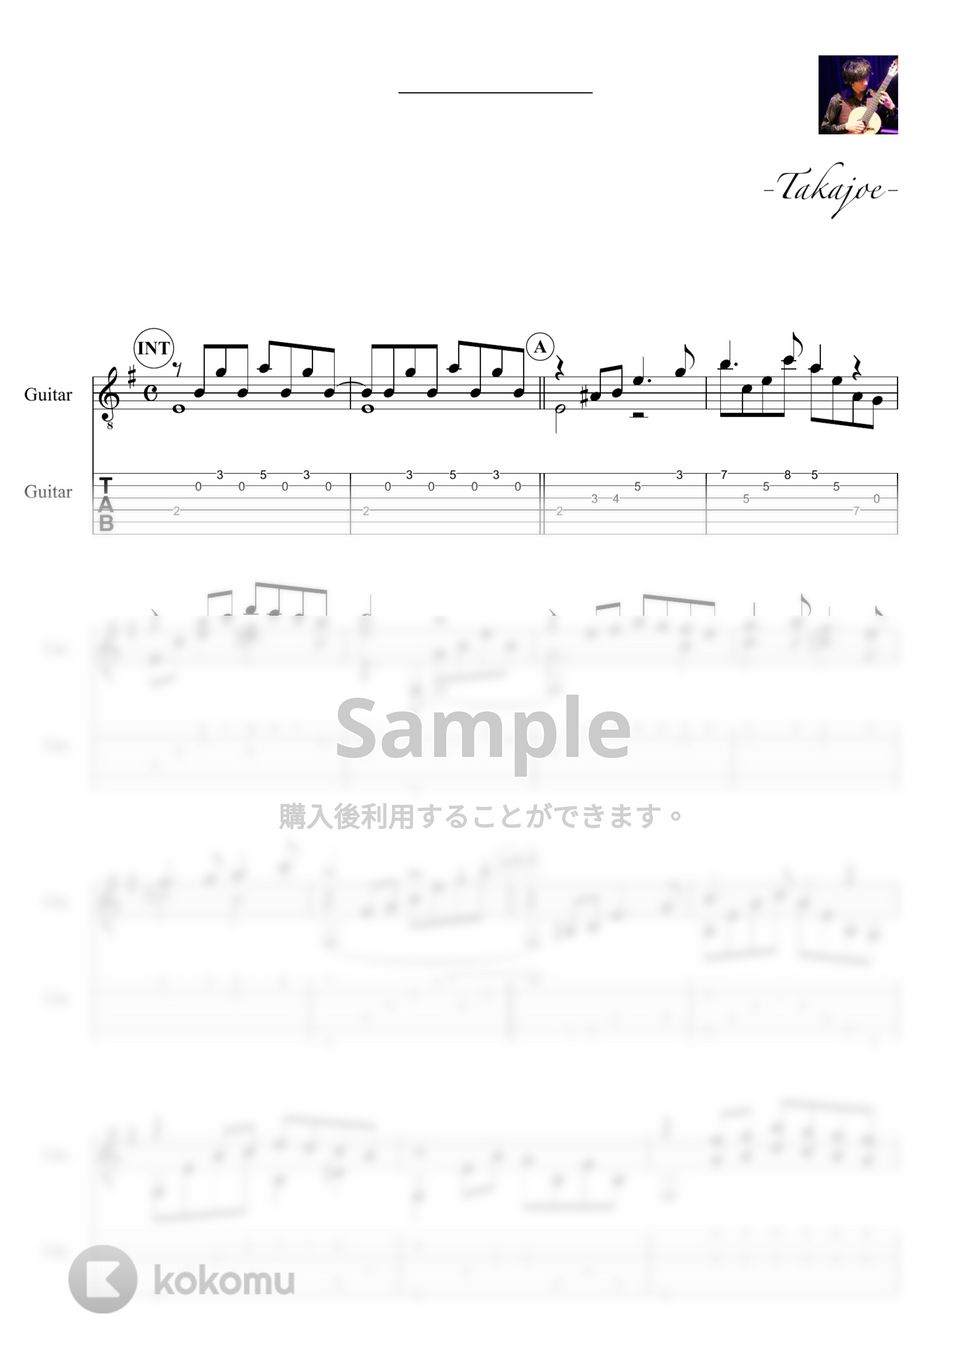 I Girasoli - ひまわり〜愛のテーマ (ヘンリー・マンシーニ) by 鷹城-Takajoe-